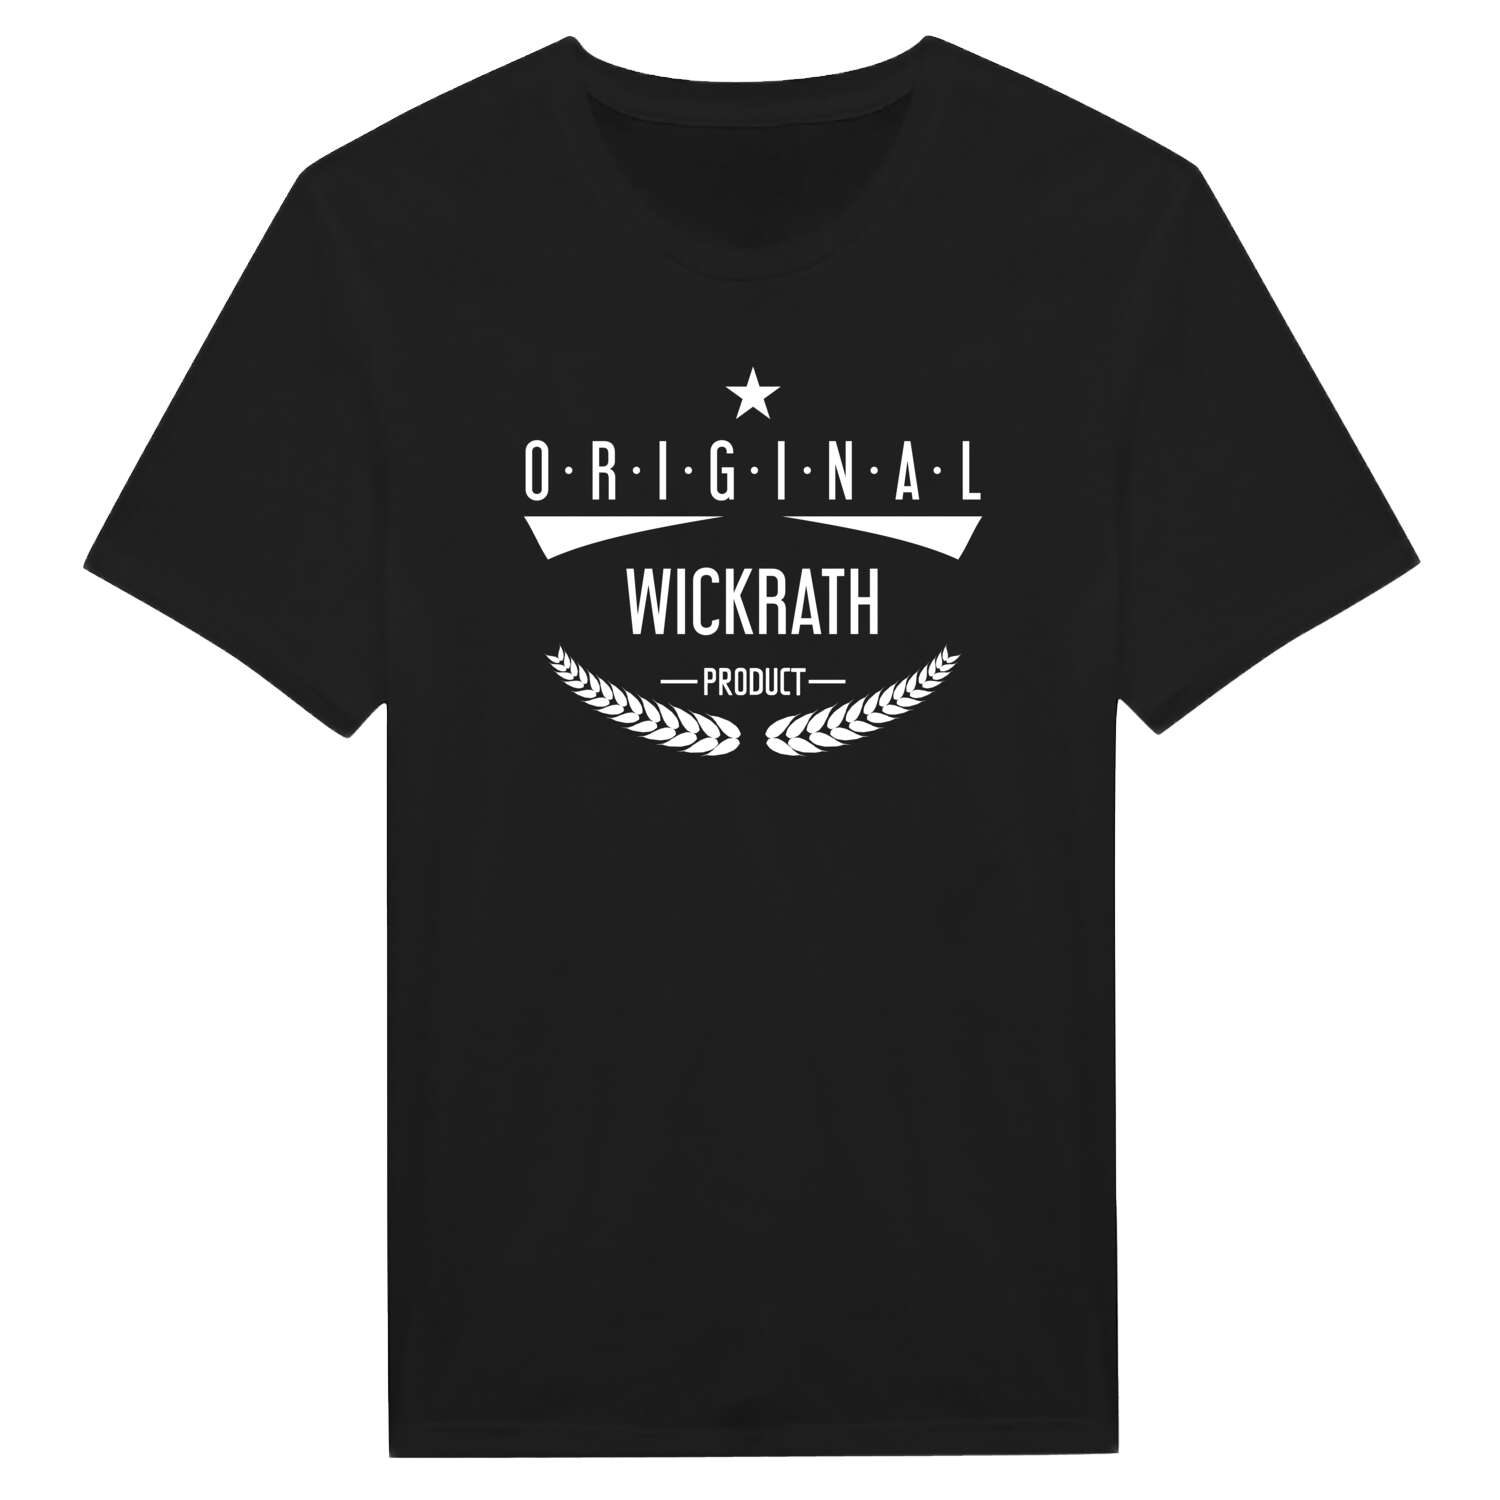 Wickrath T-Shirt »Original Product«